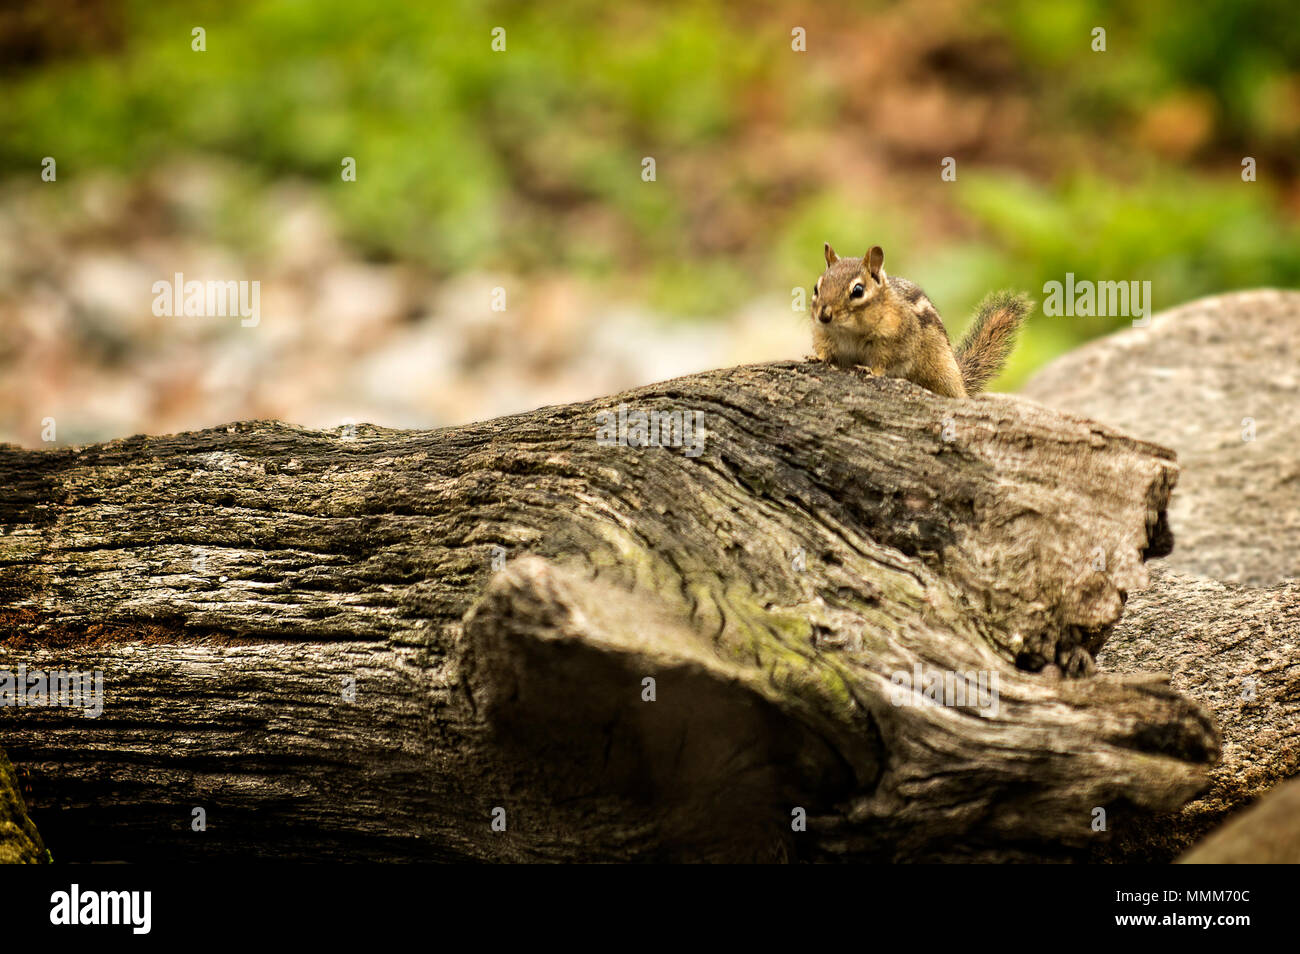 A cute Chipmunk sitting on a log. Stock Photo